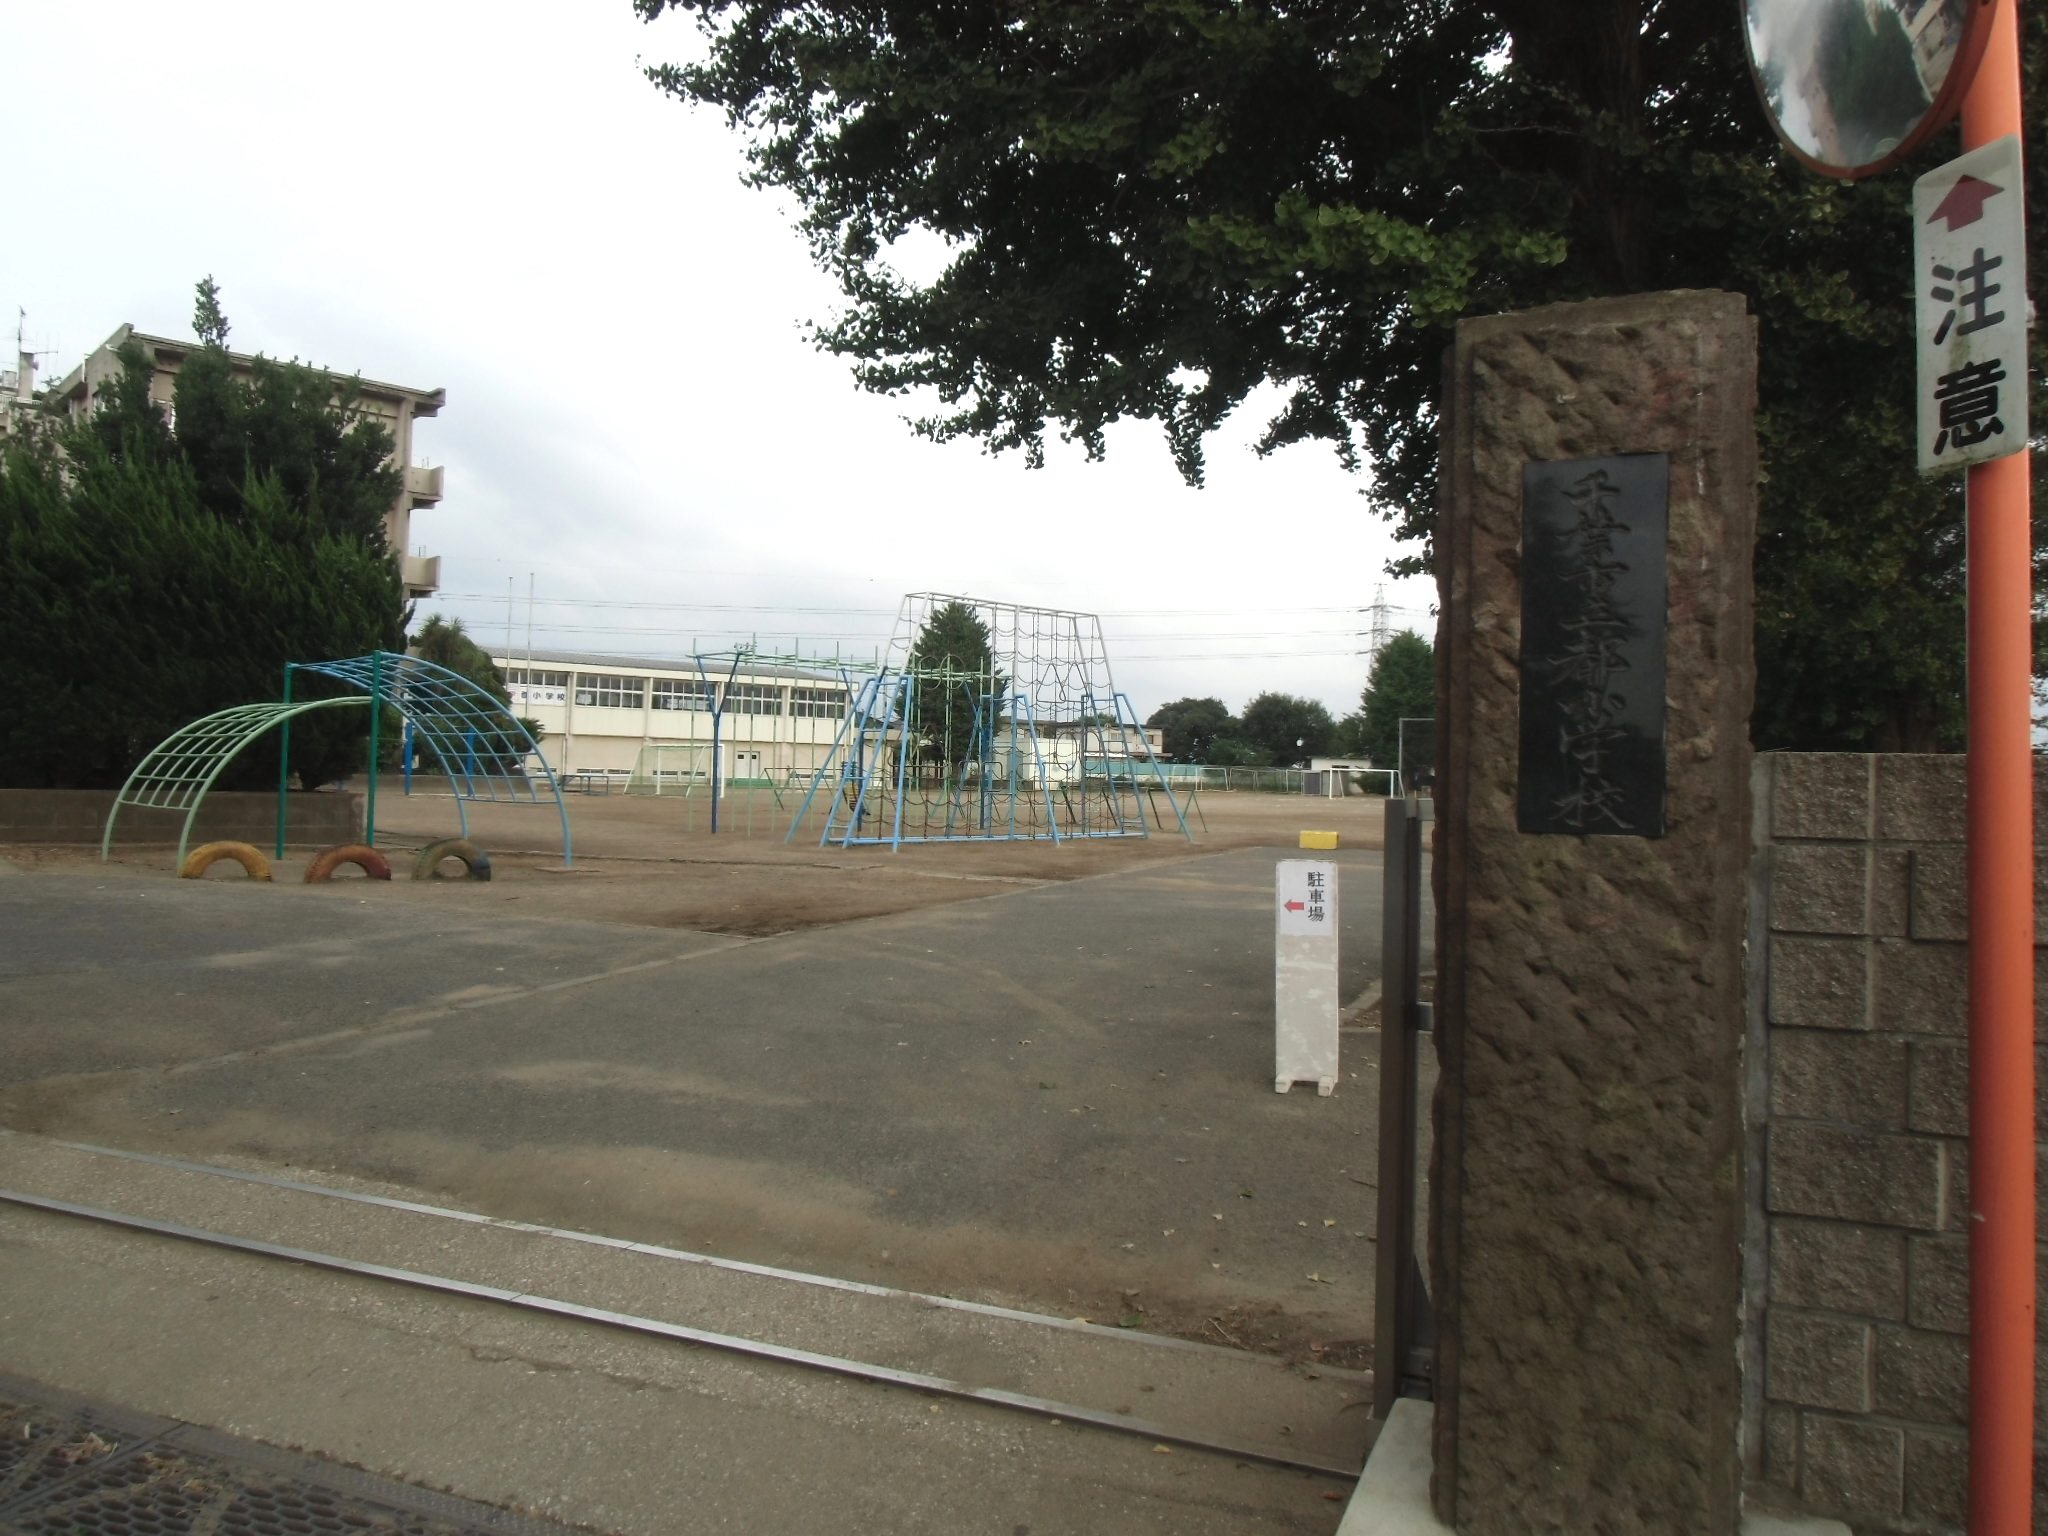 Primary school. 606m until the Chiba Municipal Metropolitan elementary school (elementary school)